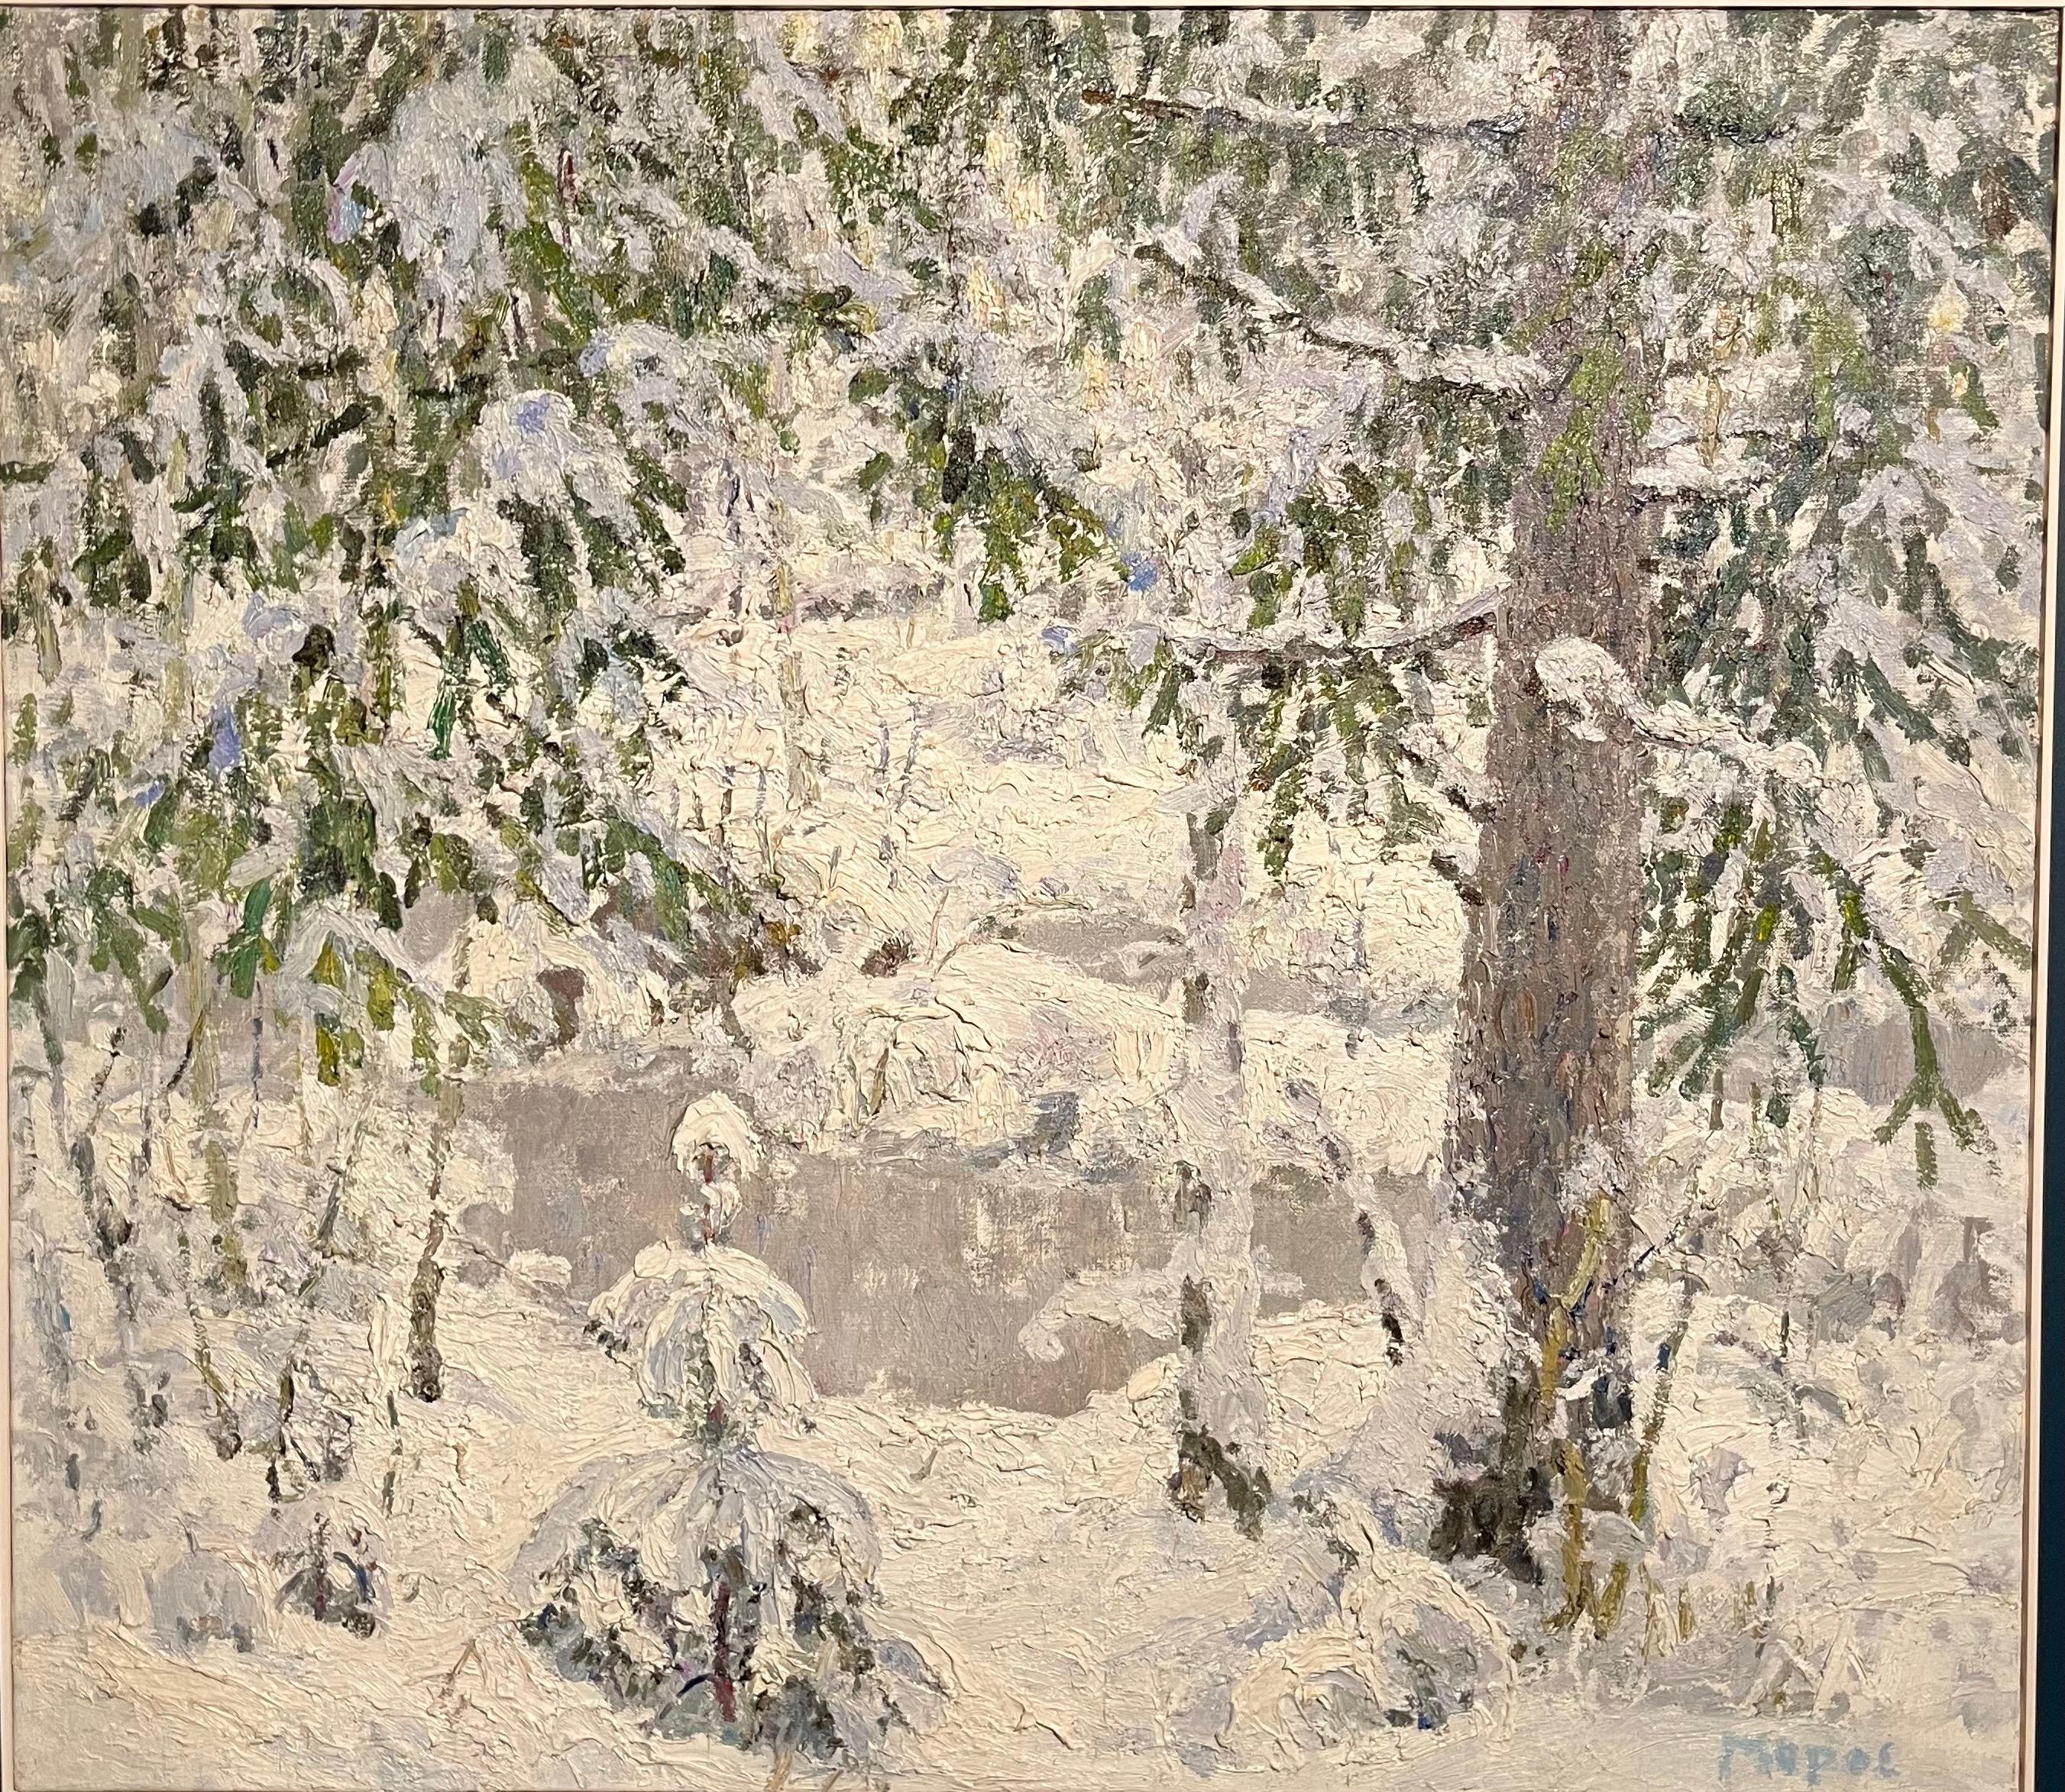 Georgij Moroz Landscape Painting - "Snowy forest" White, Snow, Oil cm 106 x 94  